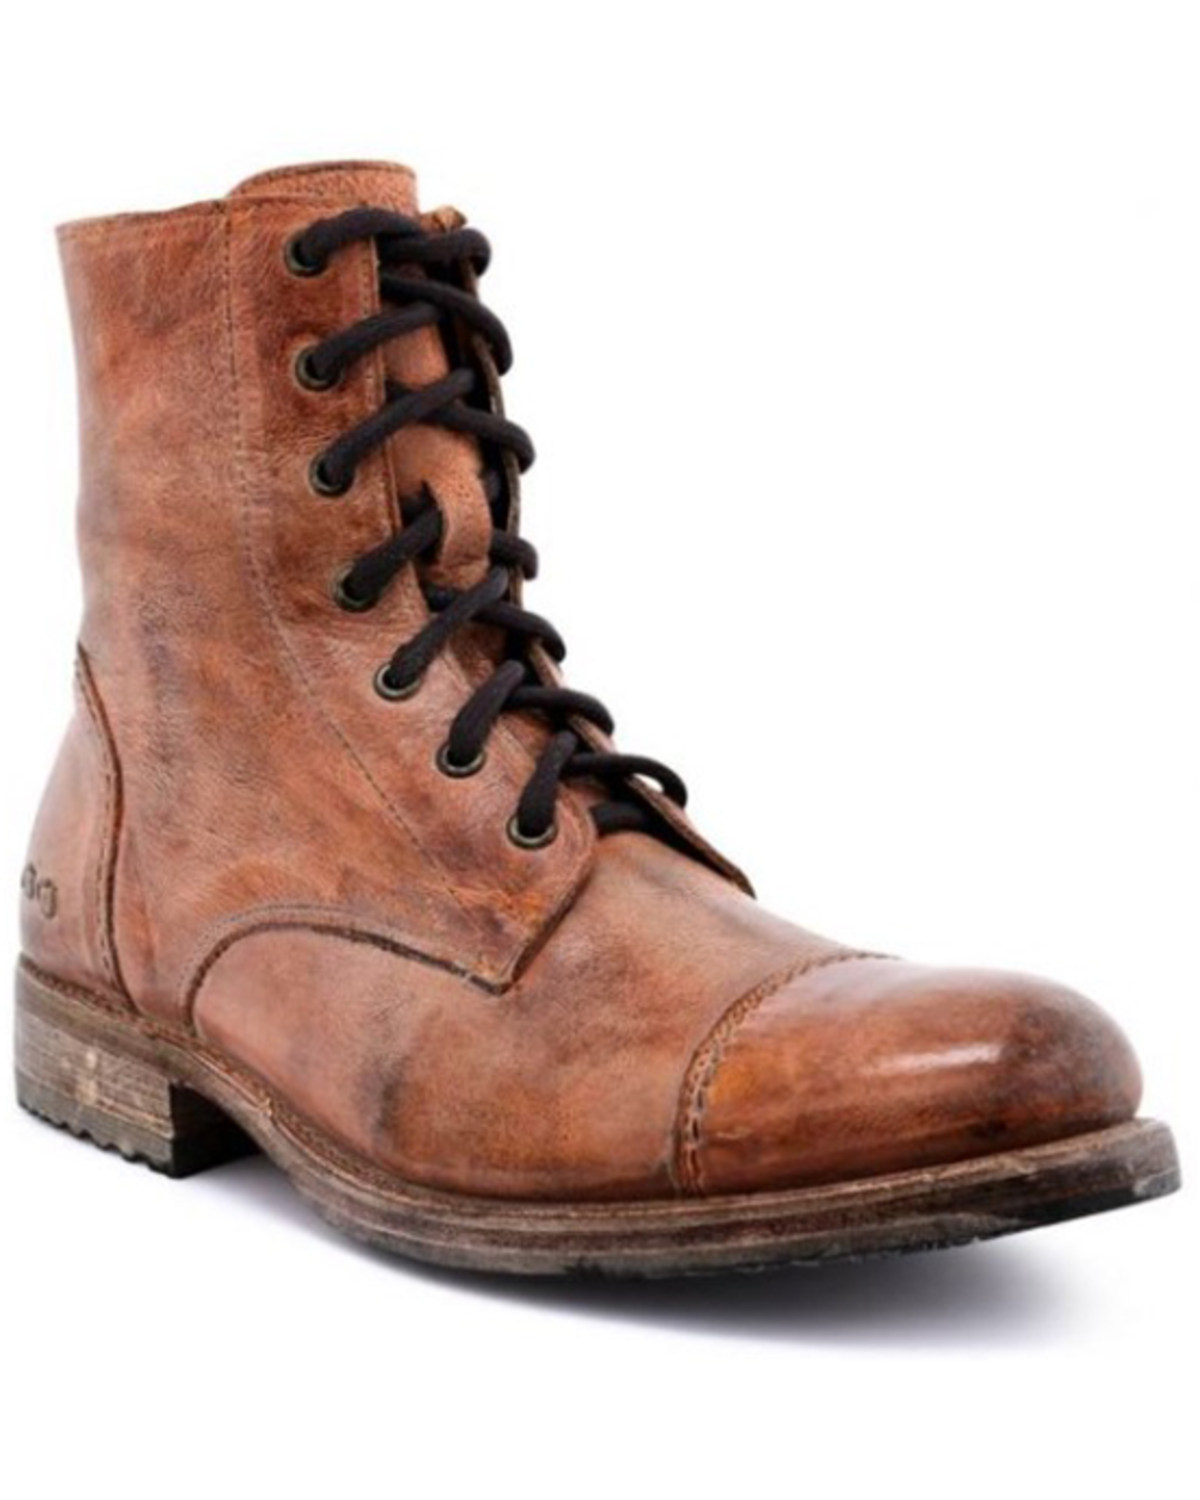 Bed Stu Men's Proteige Tan Rustic Lace-Up Casual Western Boot - Cap Toe